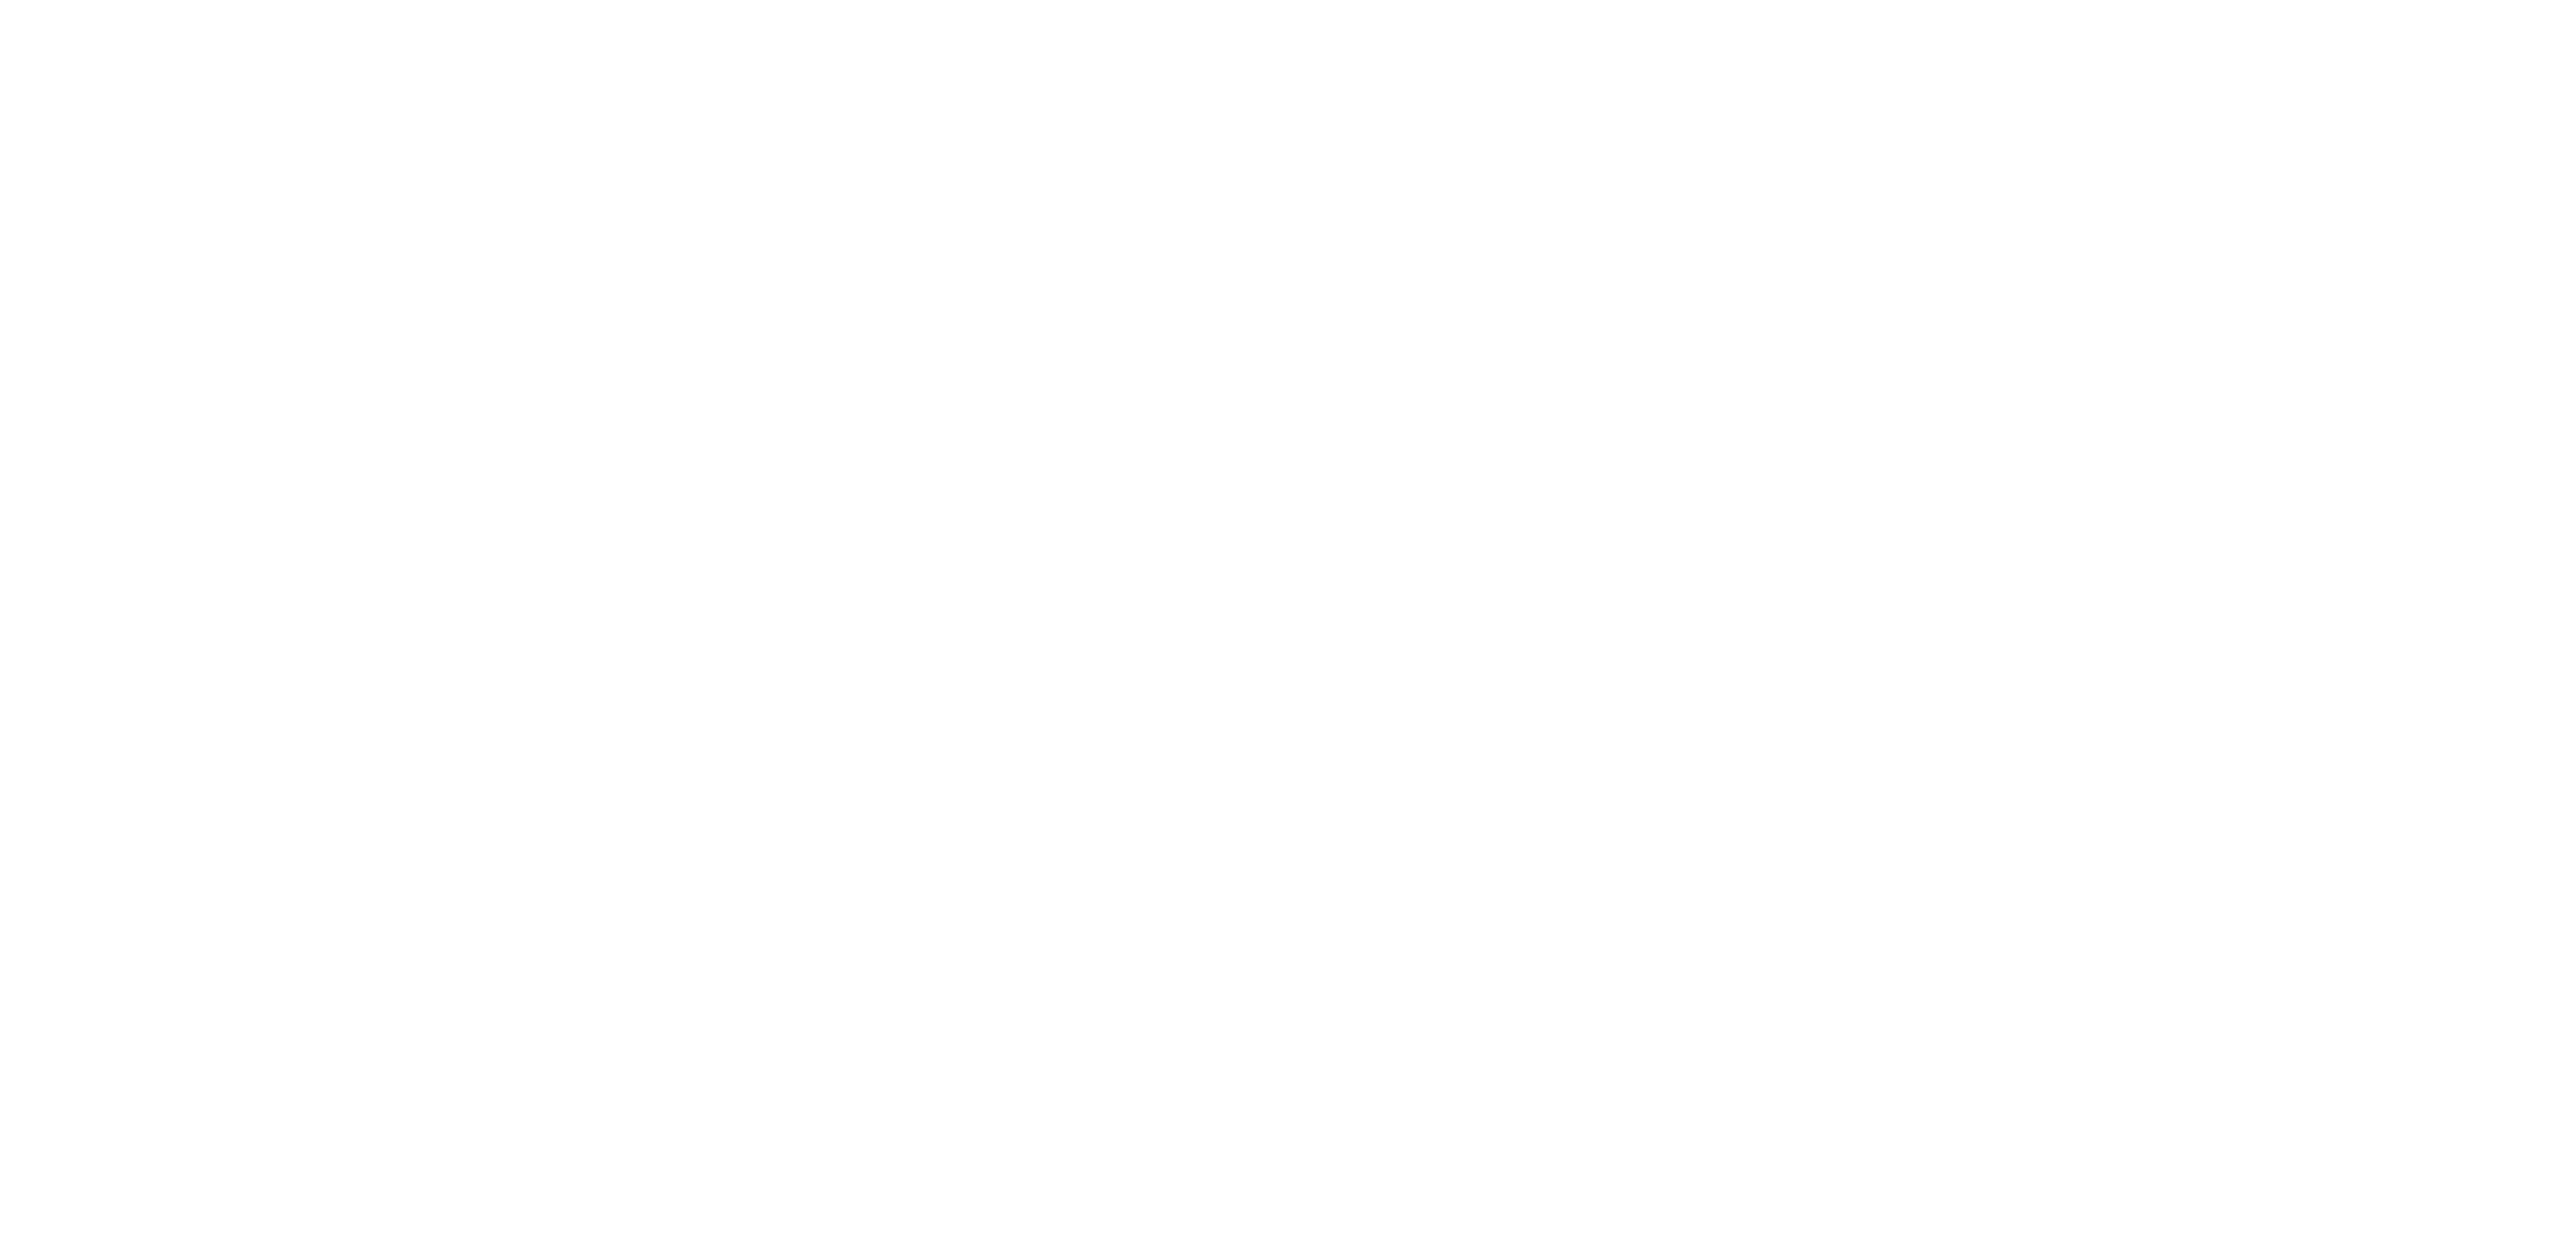 Marine mammal emergencies